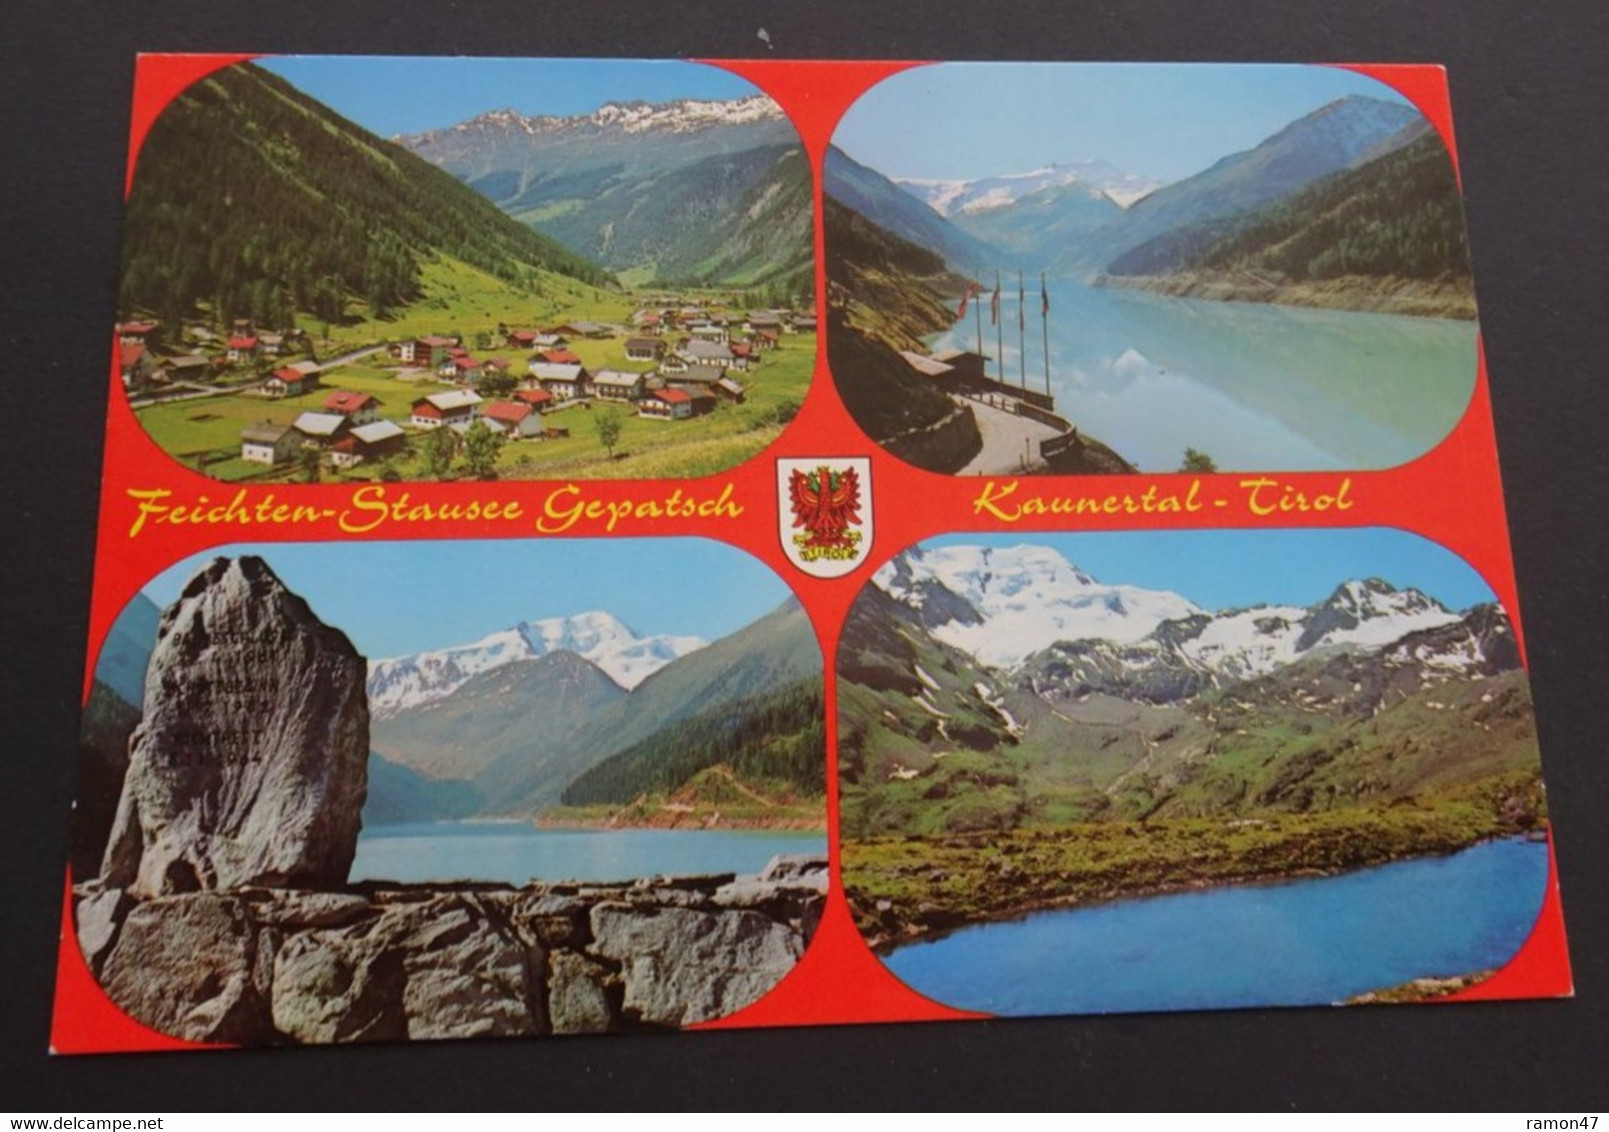 Feichten-Stausee Gepatsch, Kaunertal - Tirol (Rudolf Mathis, Landeck) - # 3049 - Kaunertal